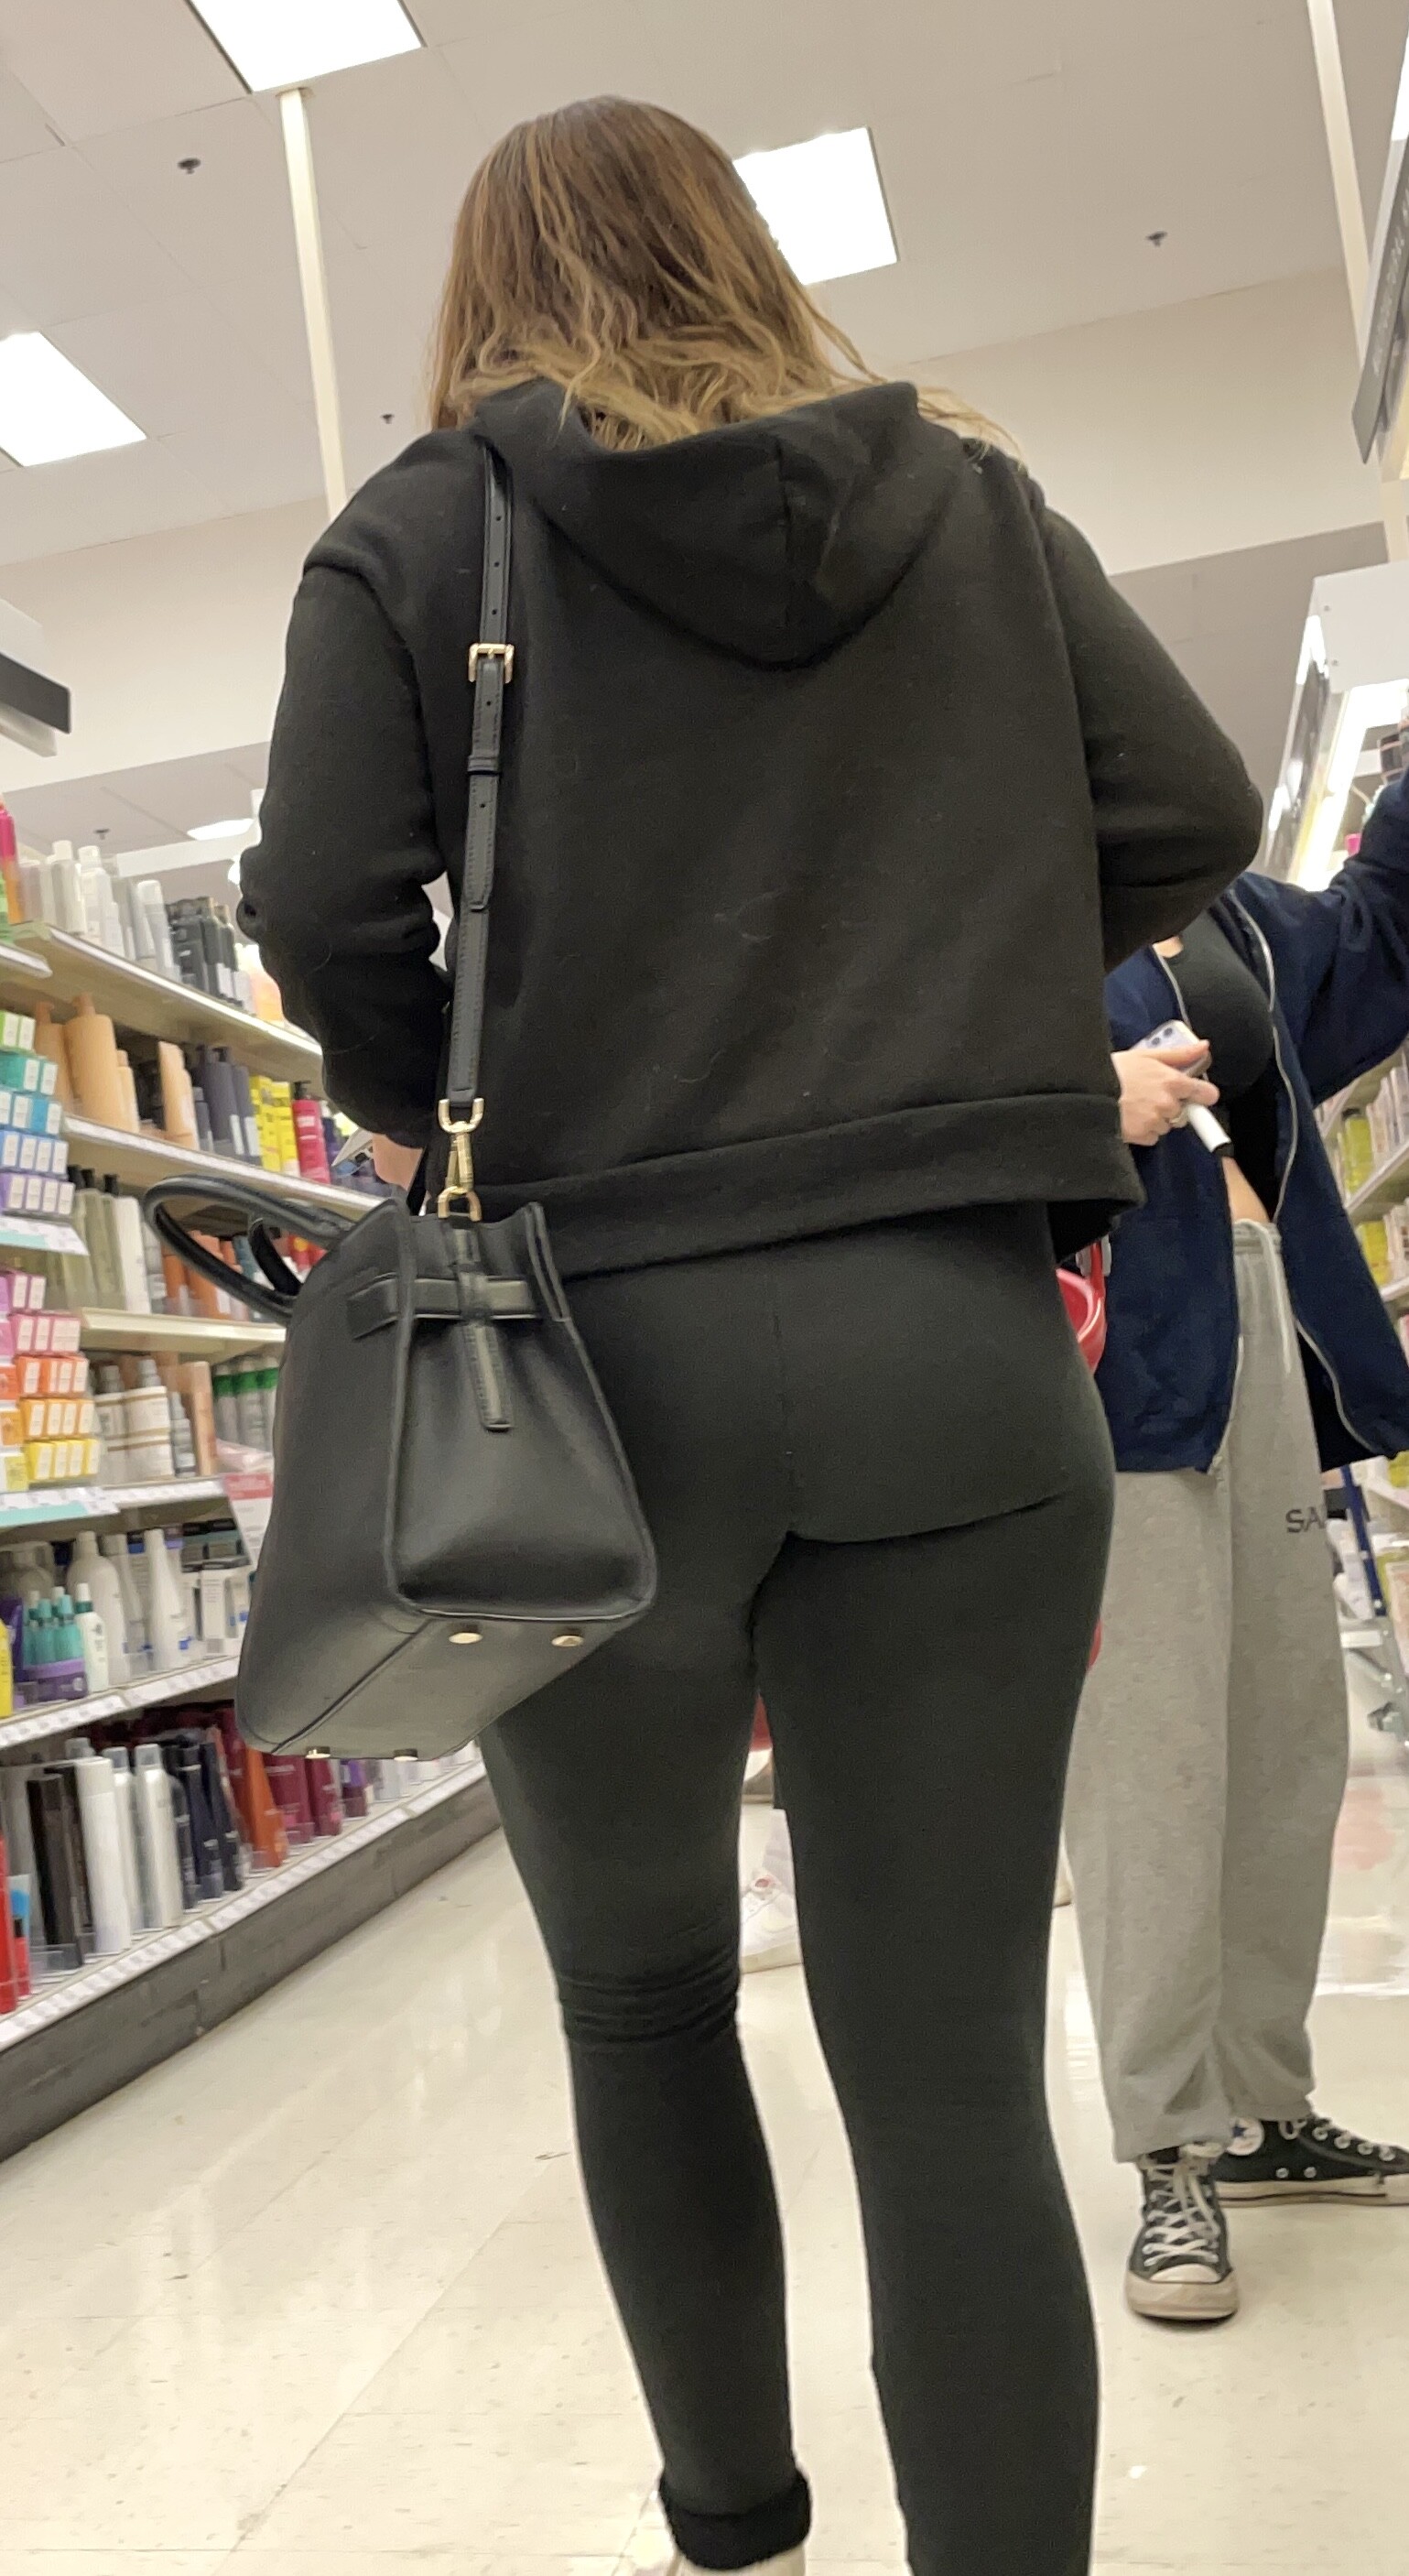 She has it all - Black leggings - Spandex, Leggings & Yoga Pants - Forum